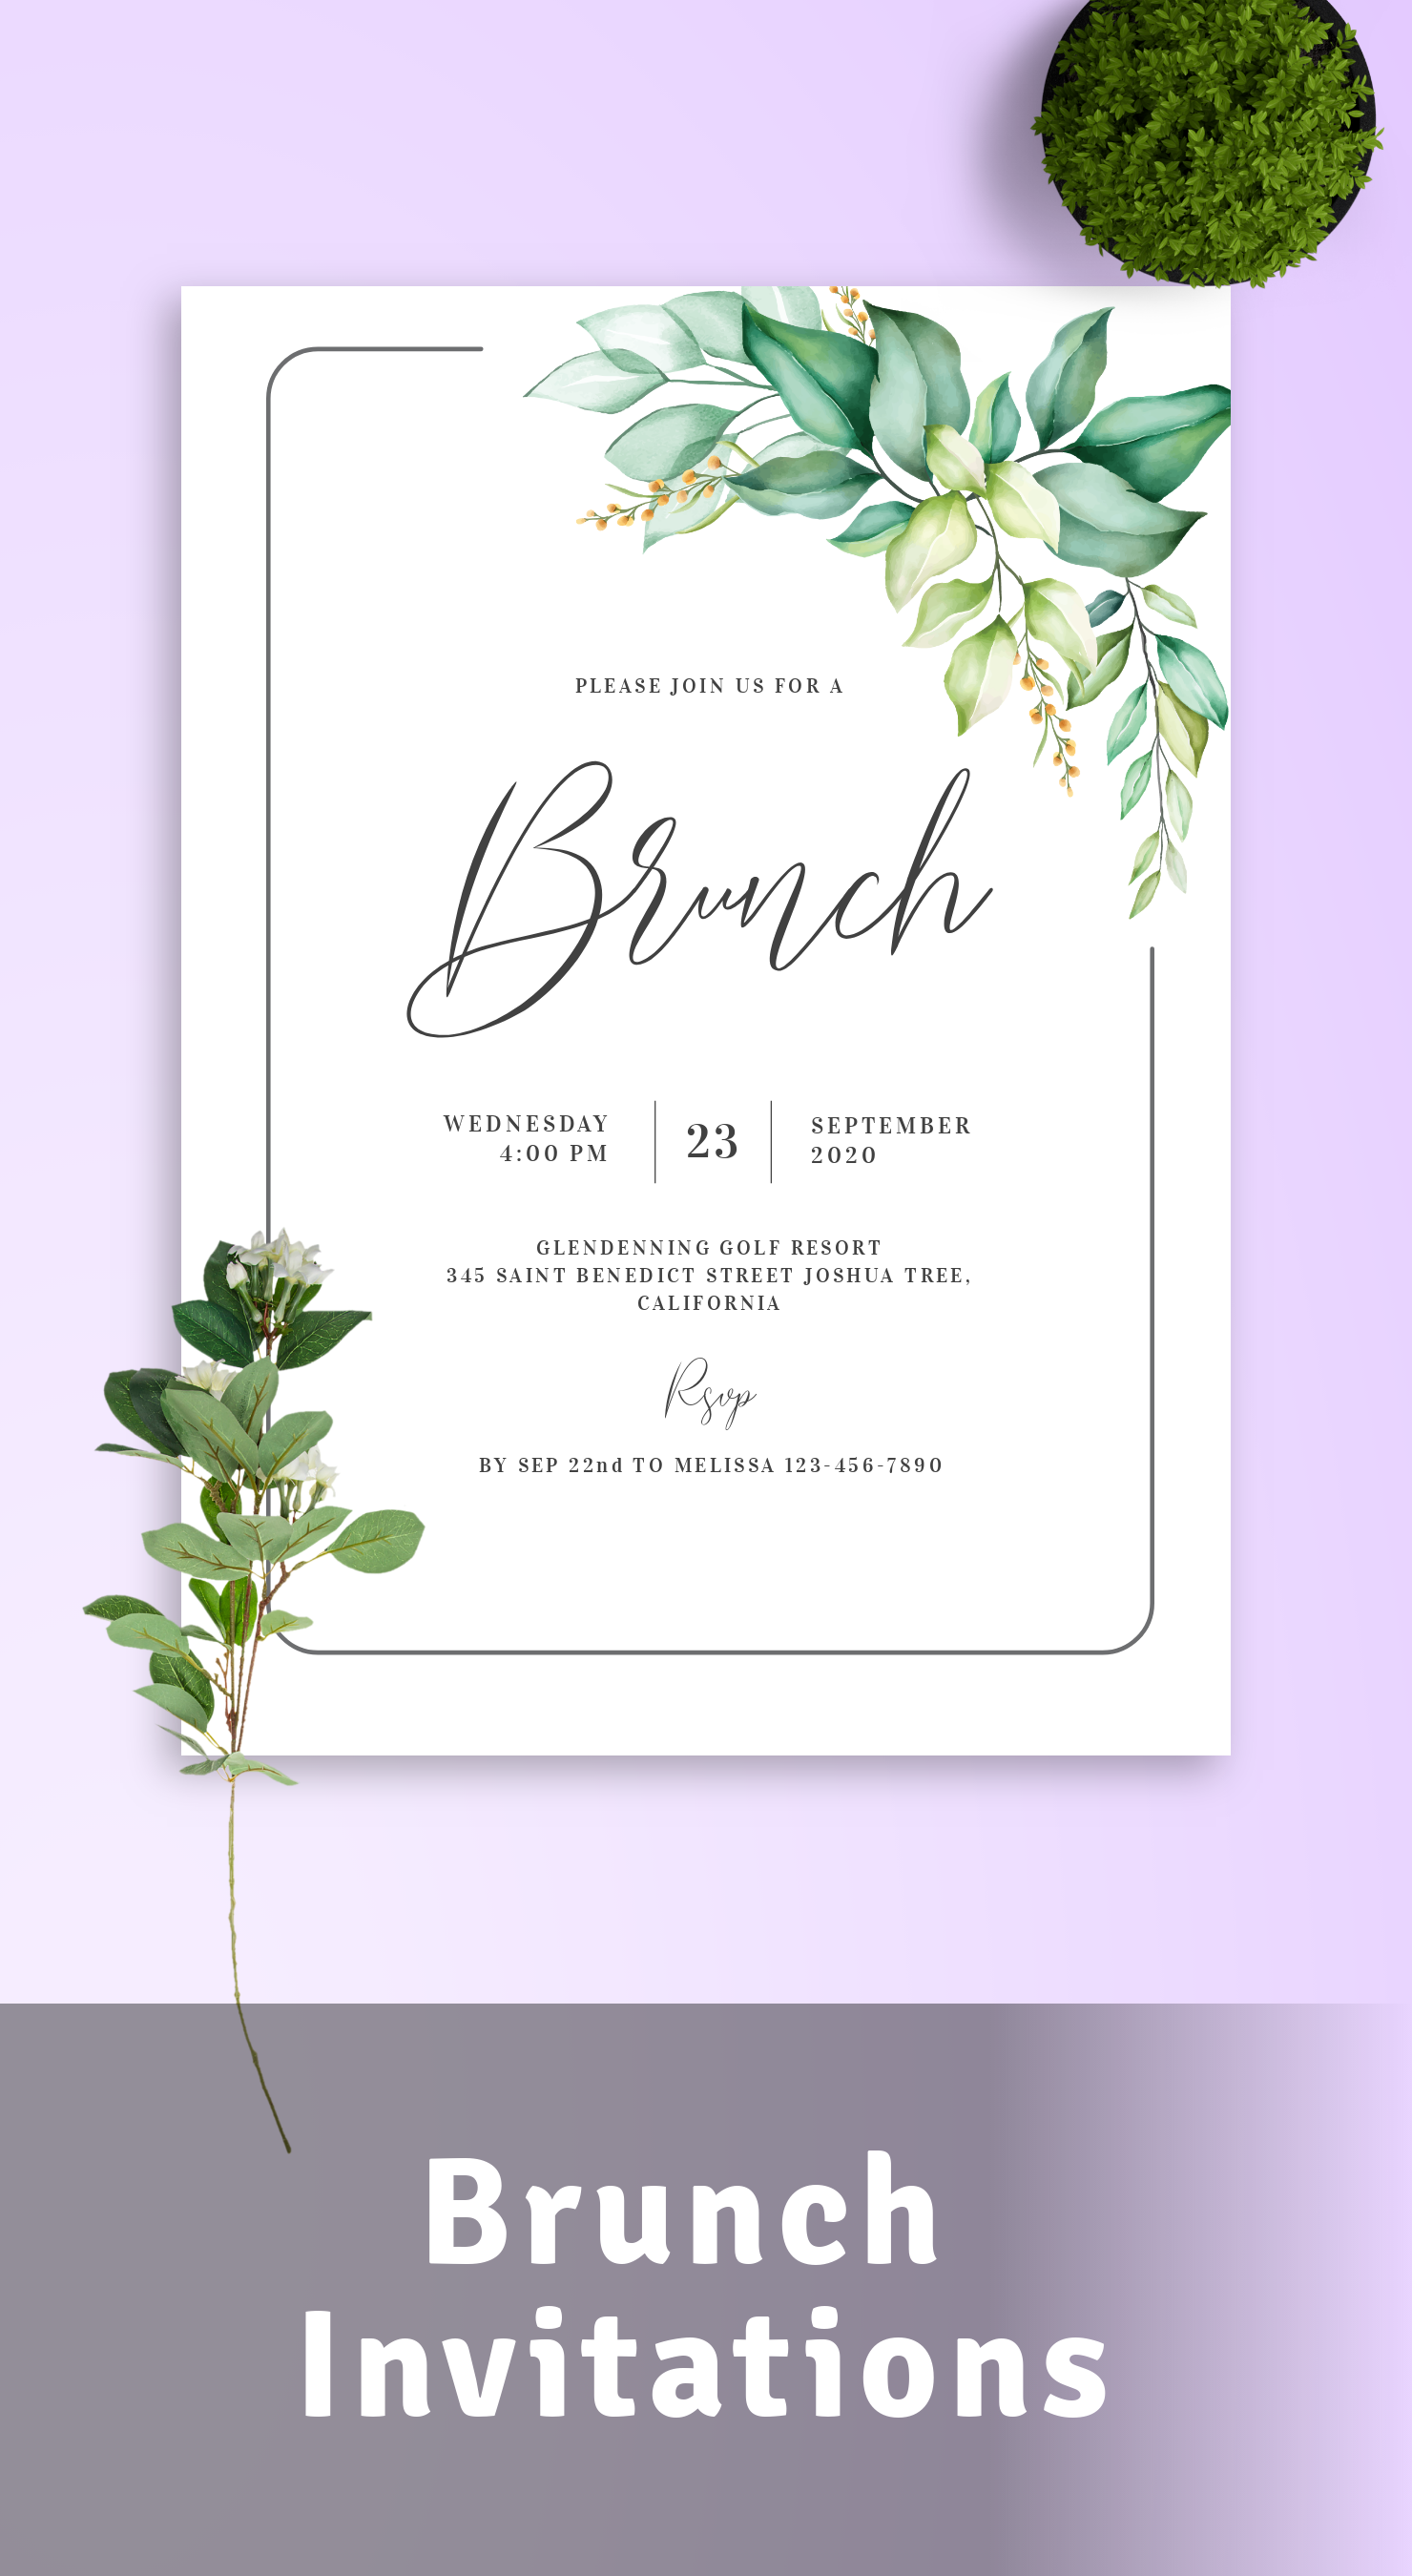 Brunch Invitations PDF or Prints